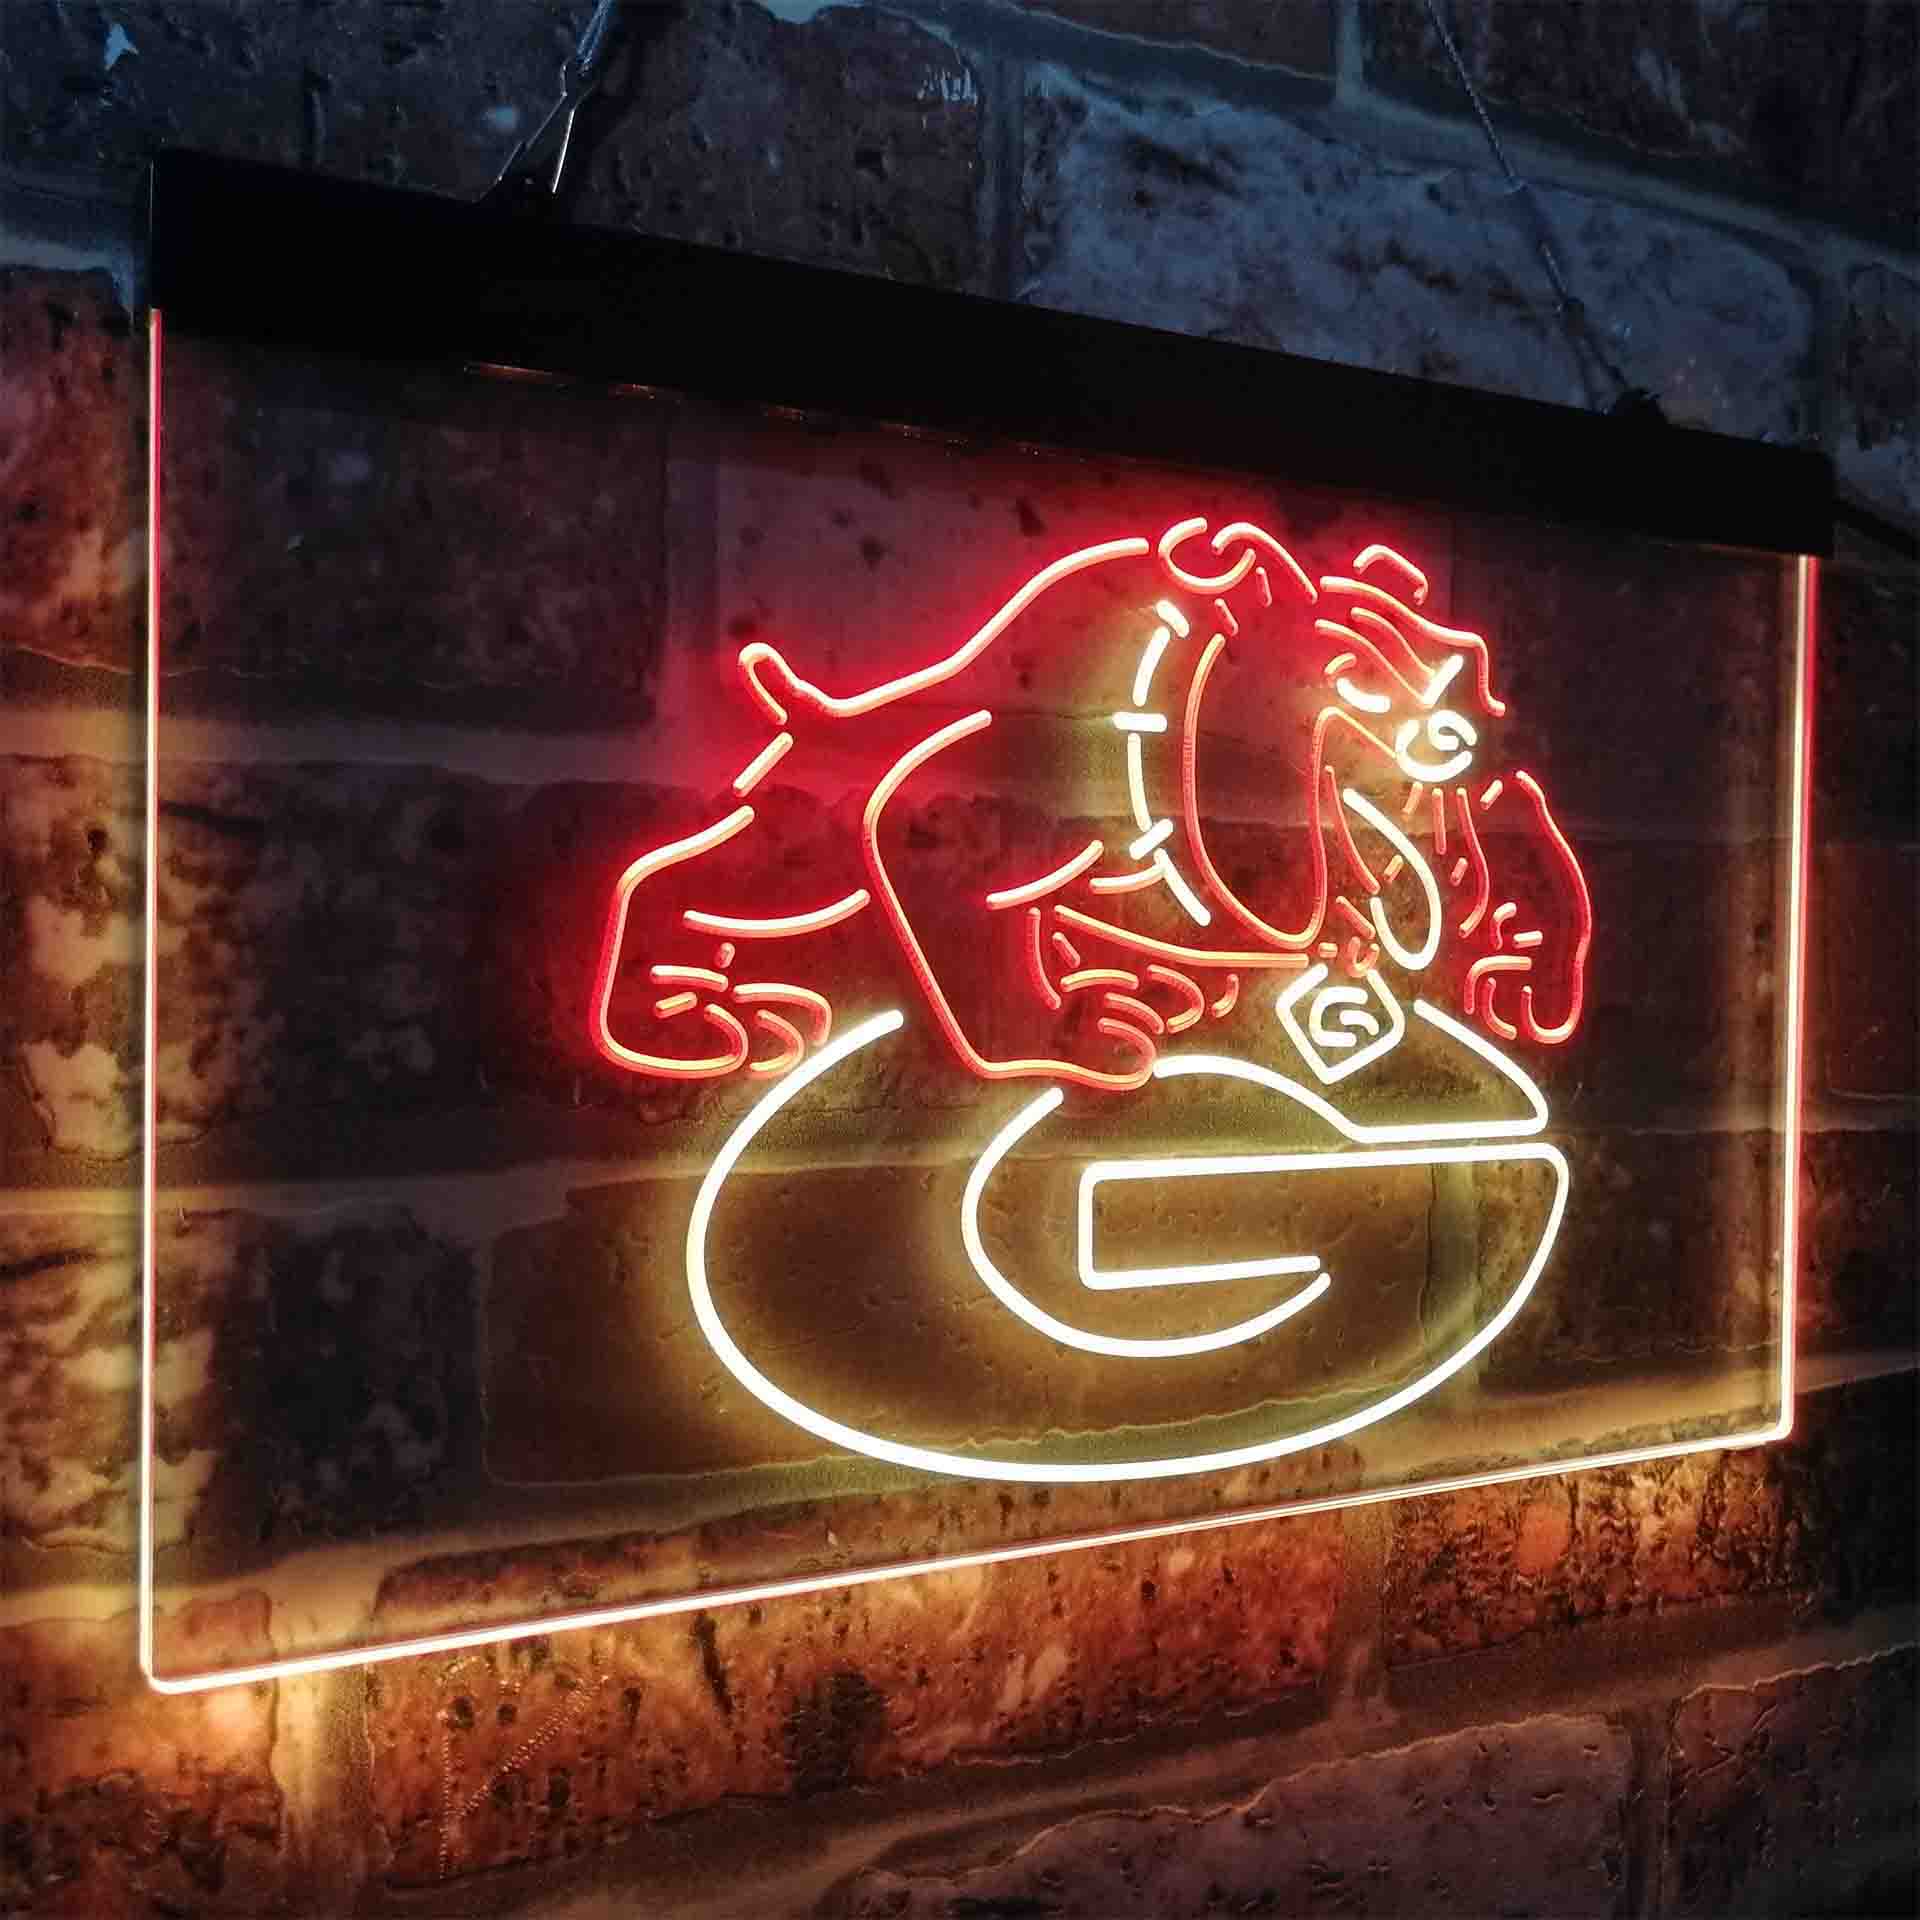 Georgias Football Club League Bulldogs LED Neon Sign